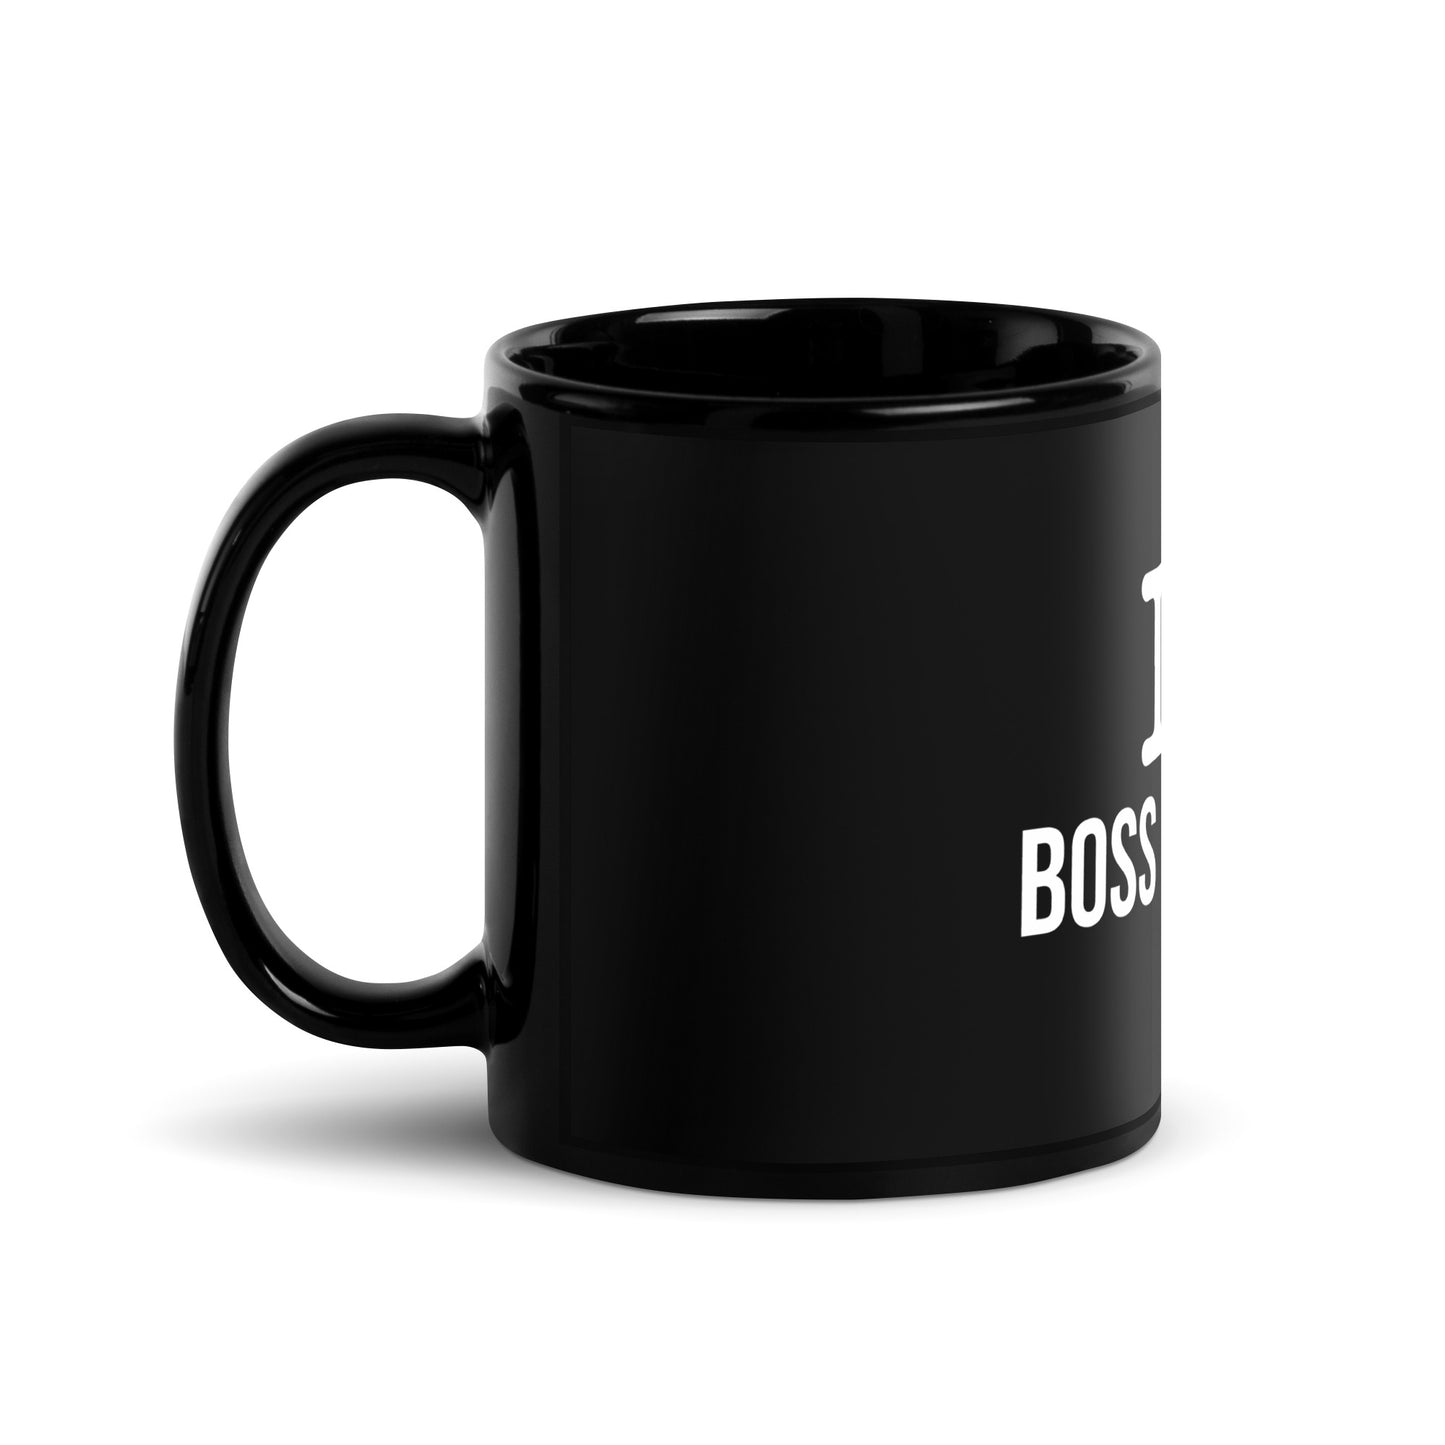 I Love Boss Behavior Black Glossy Mug